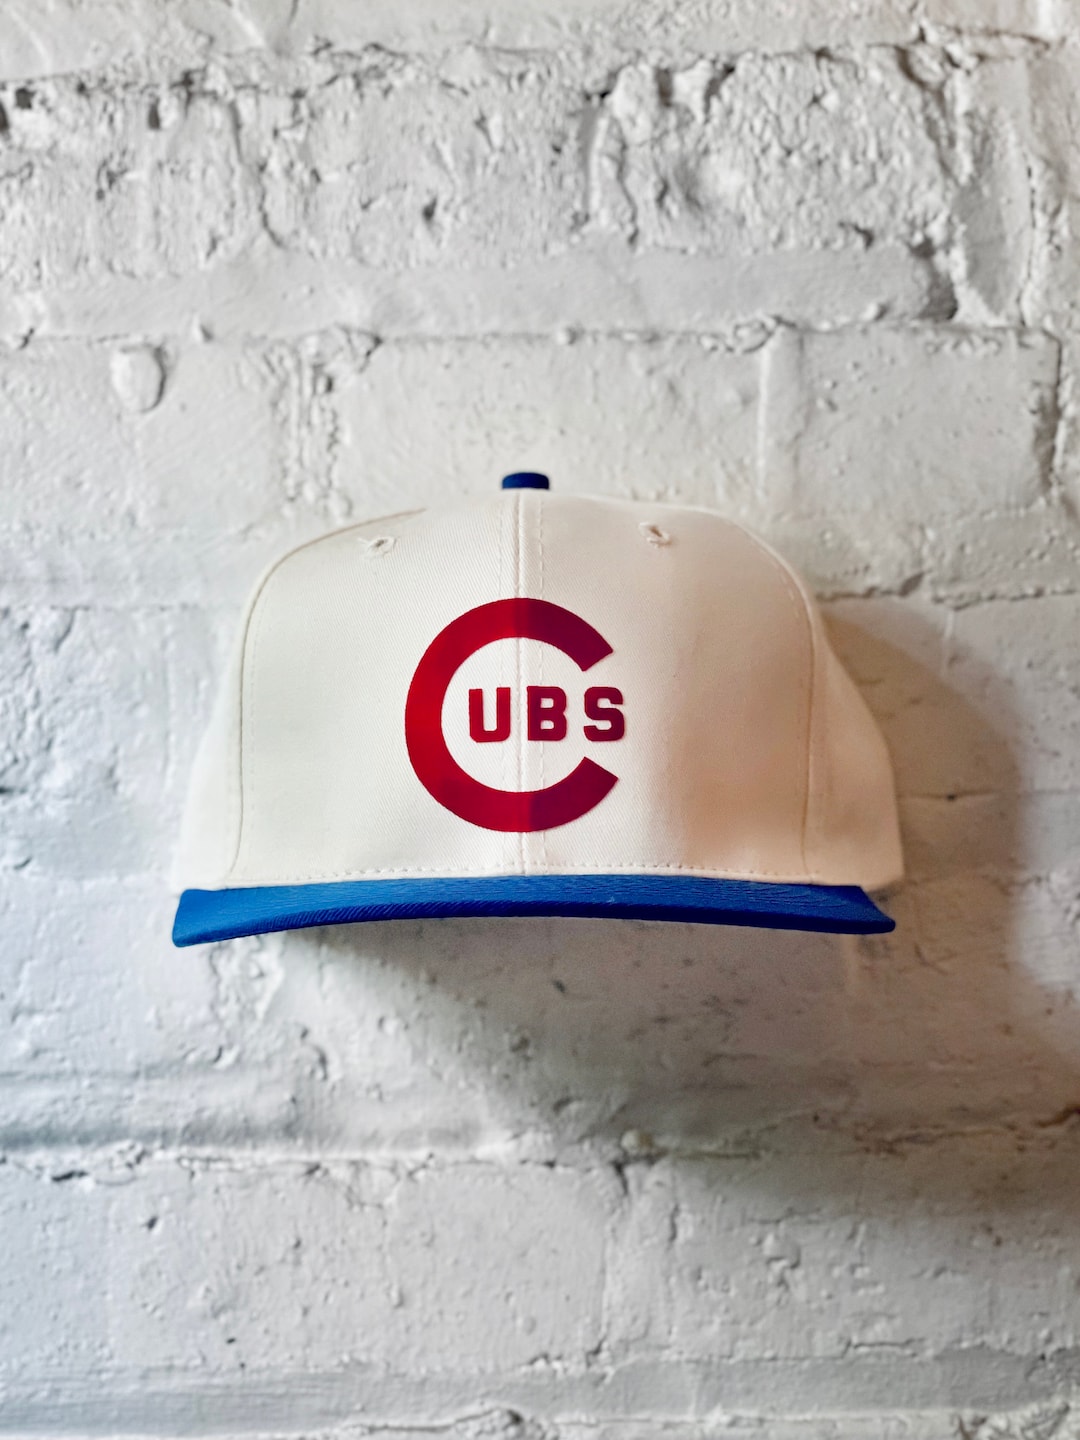 Official Mens Chicago Cubs Hats, Cubs Cap, Cubs Hats, Beanies